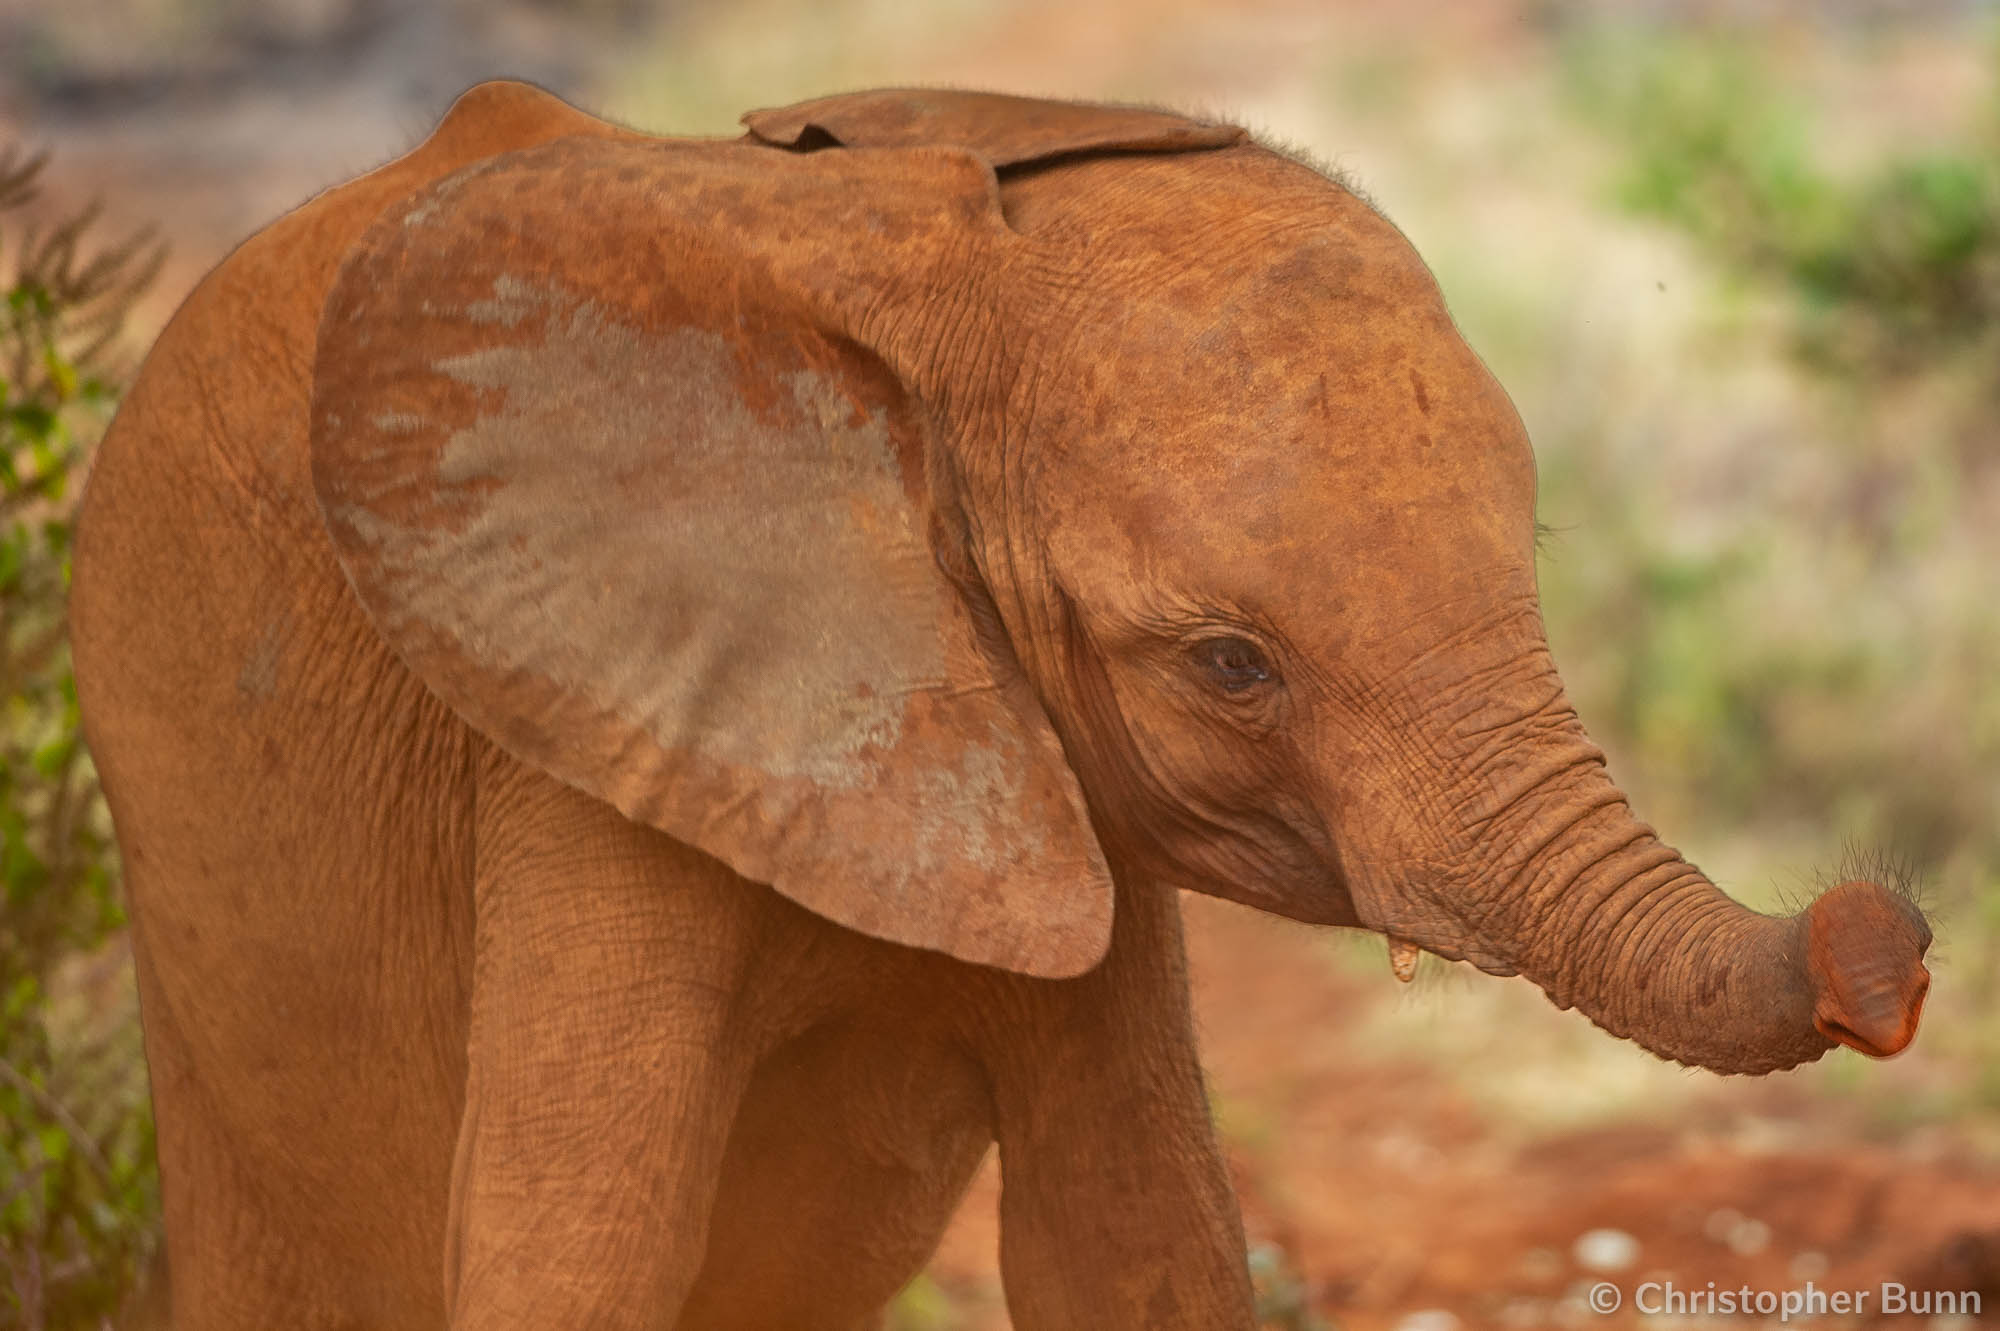 One of the rescued elephants of Sheldrick Wildlife Trust in Nairobi, Kenya.